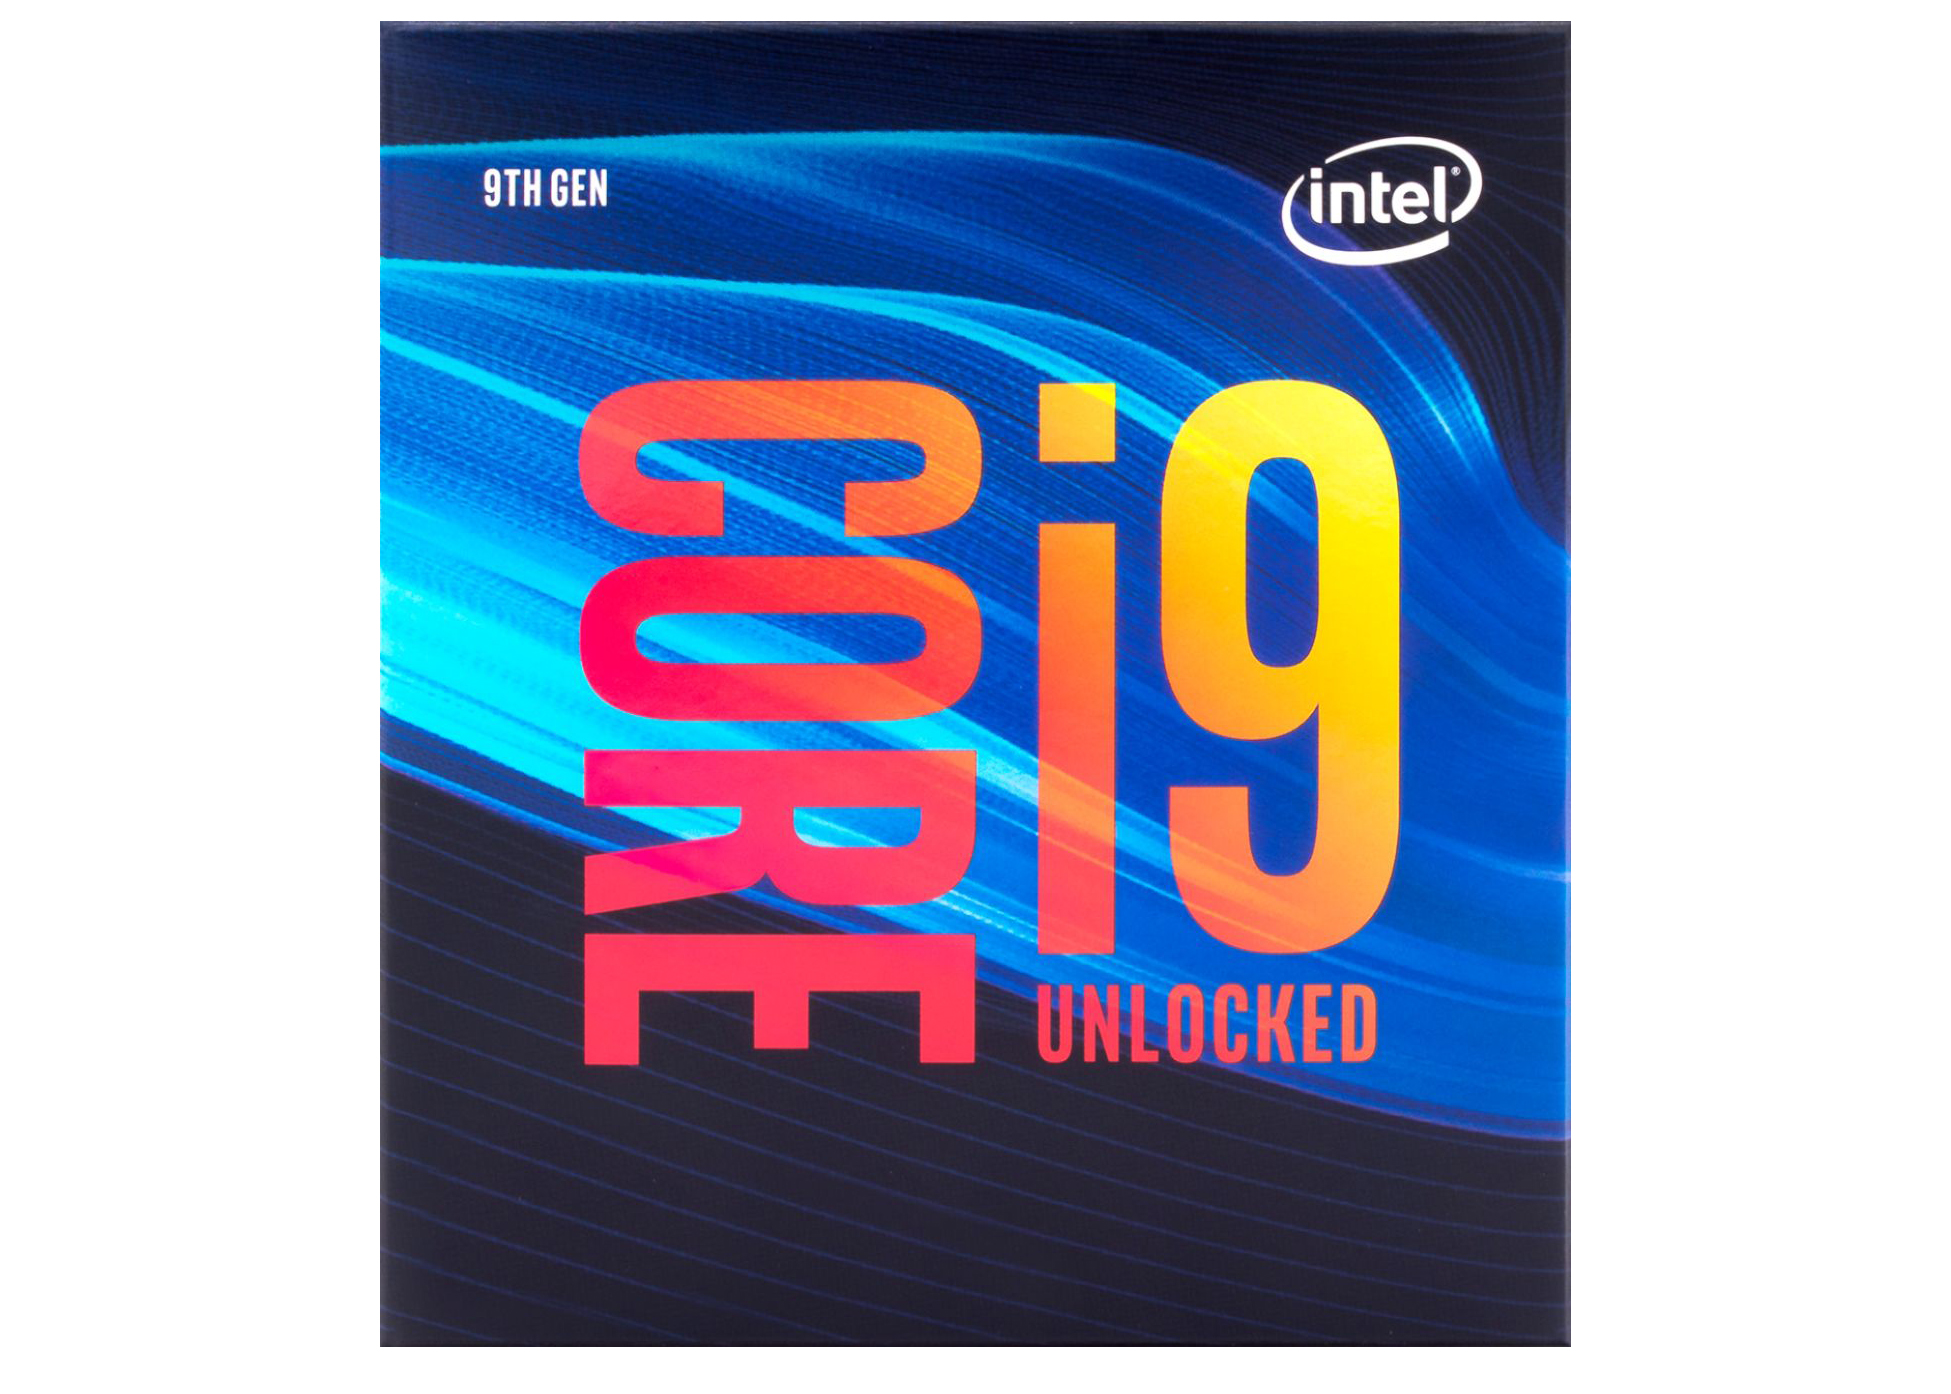 Intel Core i9-9900K 9th Generation 8-Core